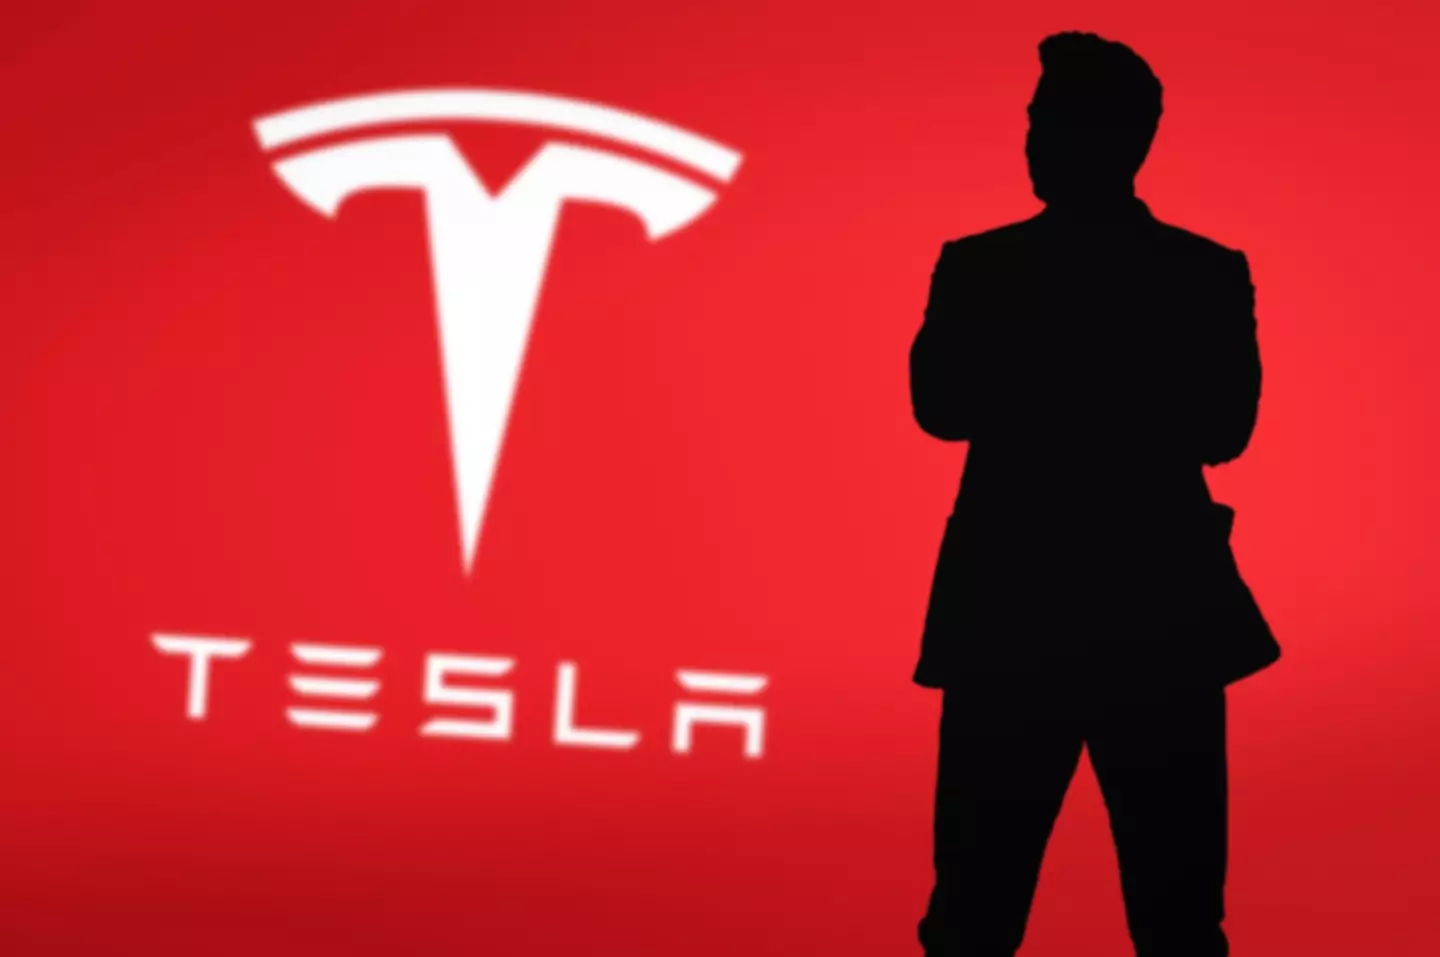 Elon Musk silhouette with Tesla logo.